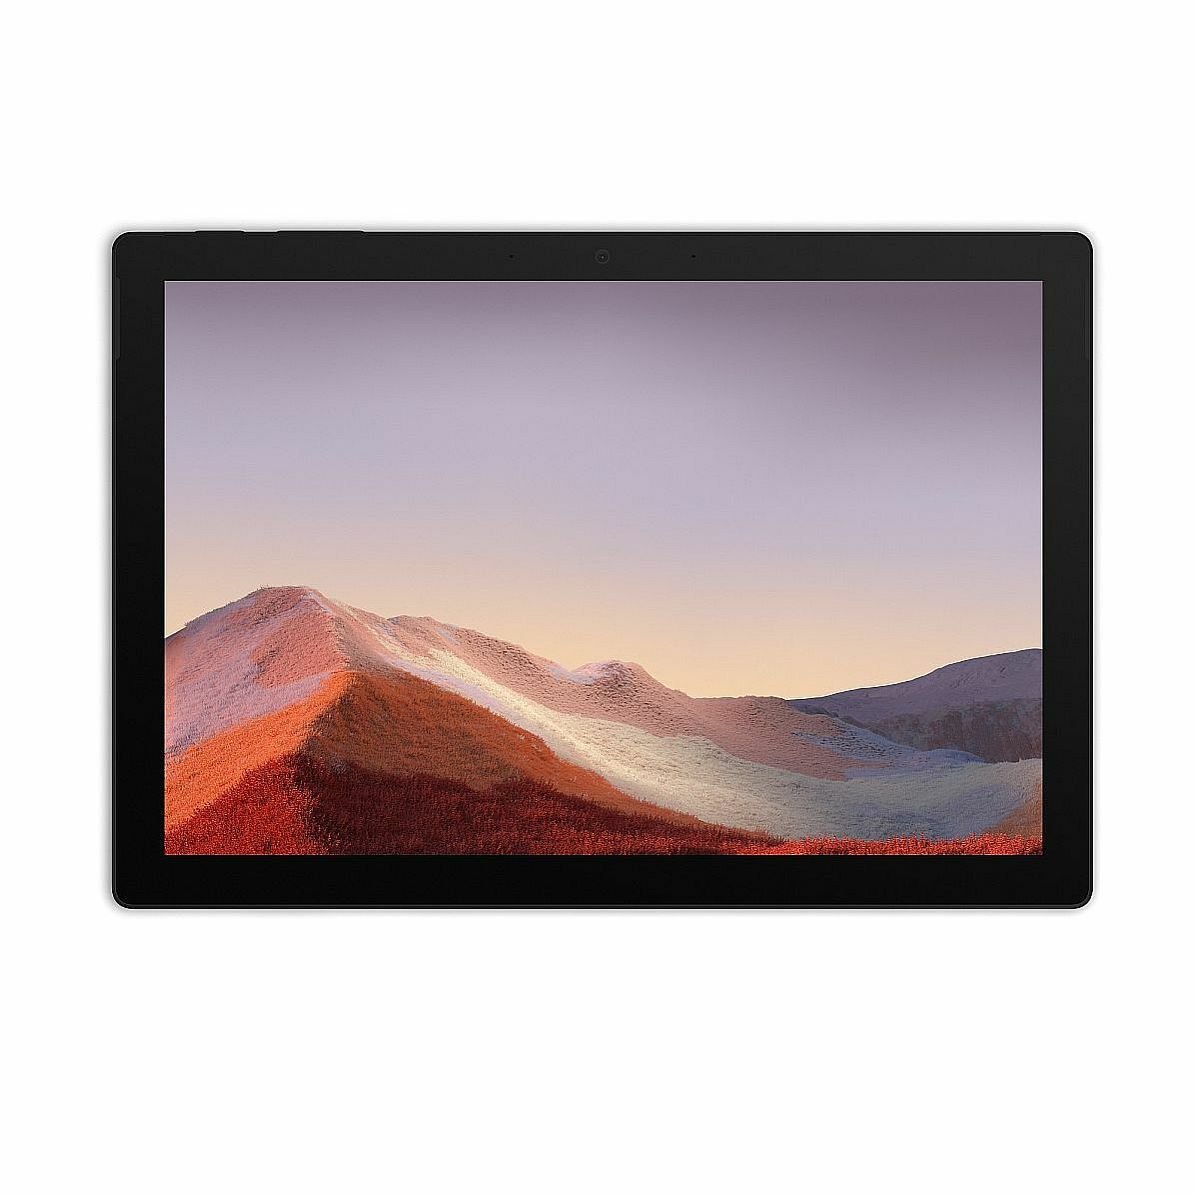 Microsoft Surface Pro 7 i7 16GB 512GB 2-in-1 Laptop - Black